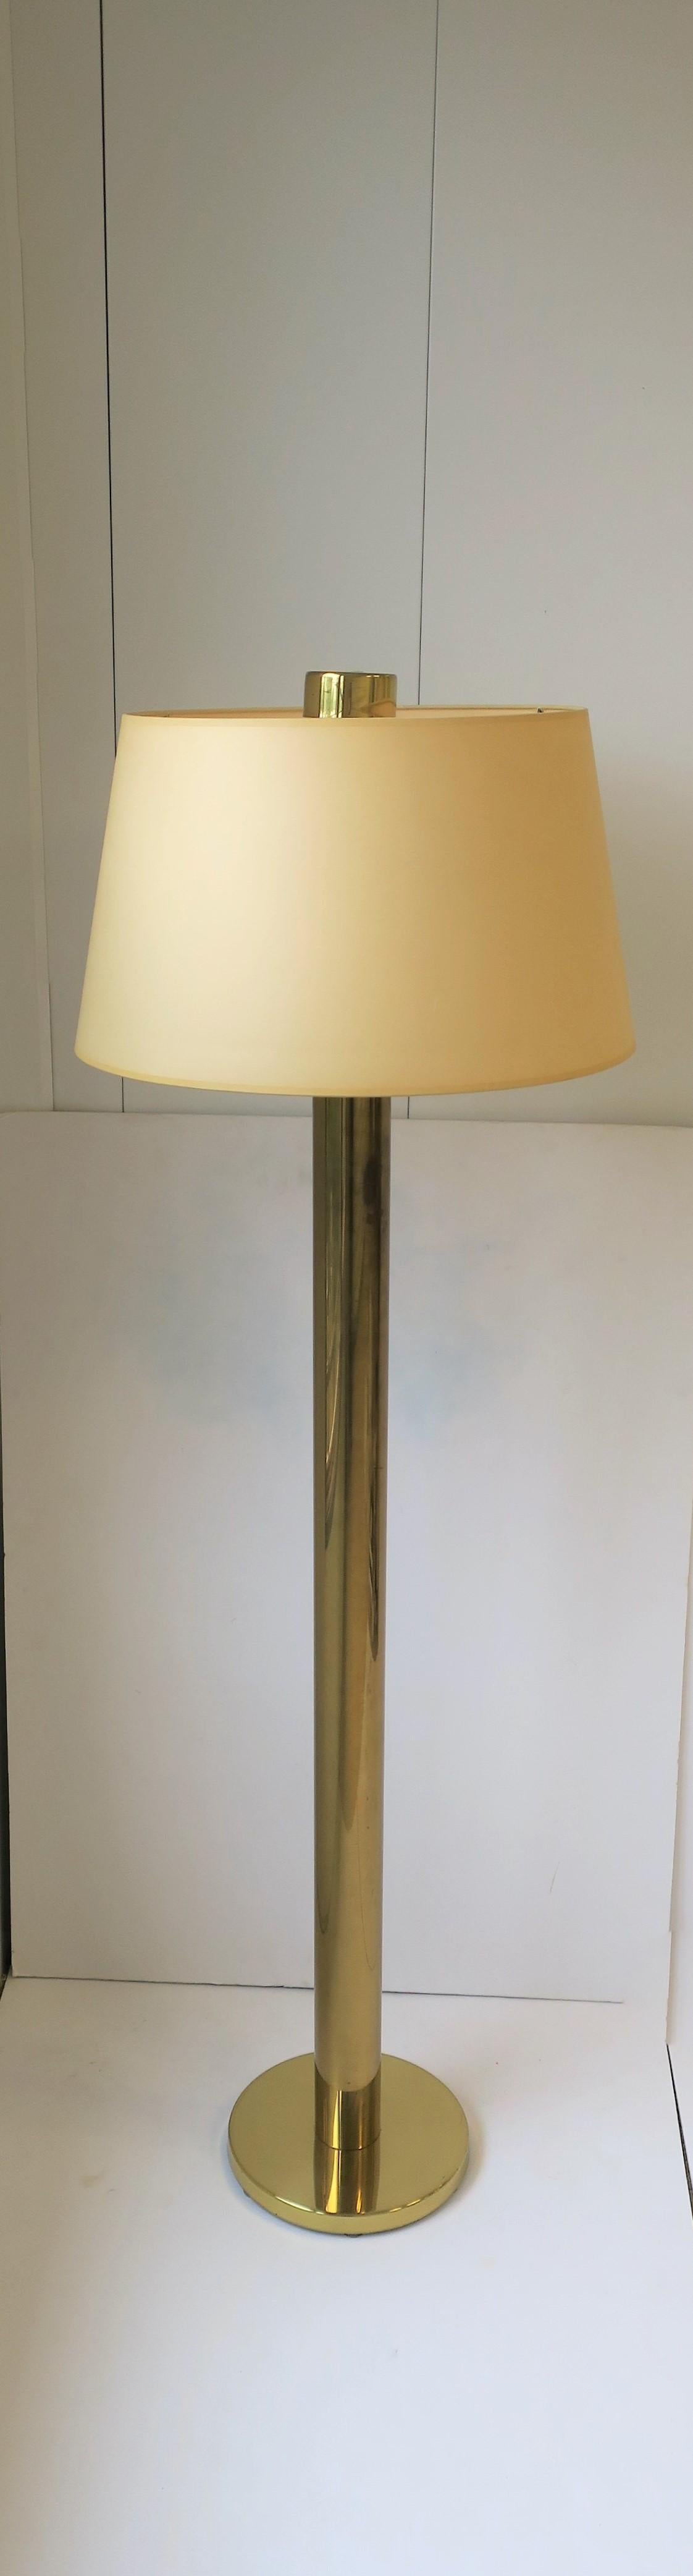 A 1970s modern brass floor lamp by Koch and Lowey. Floor lamp has tubular neck (2.75